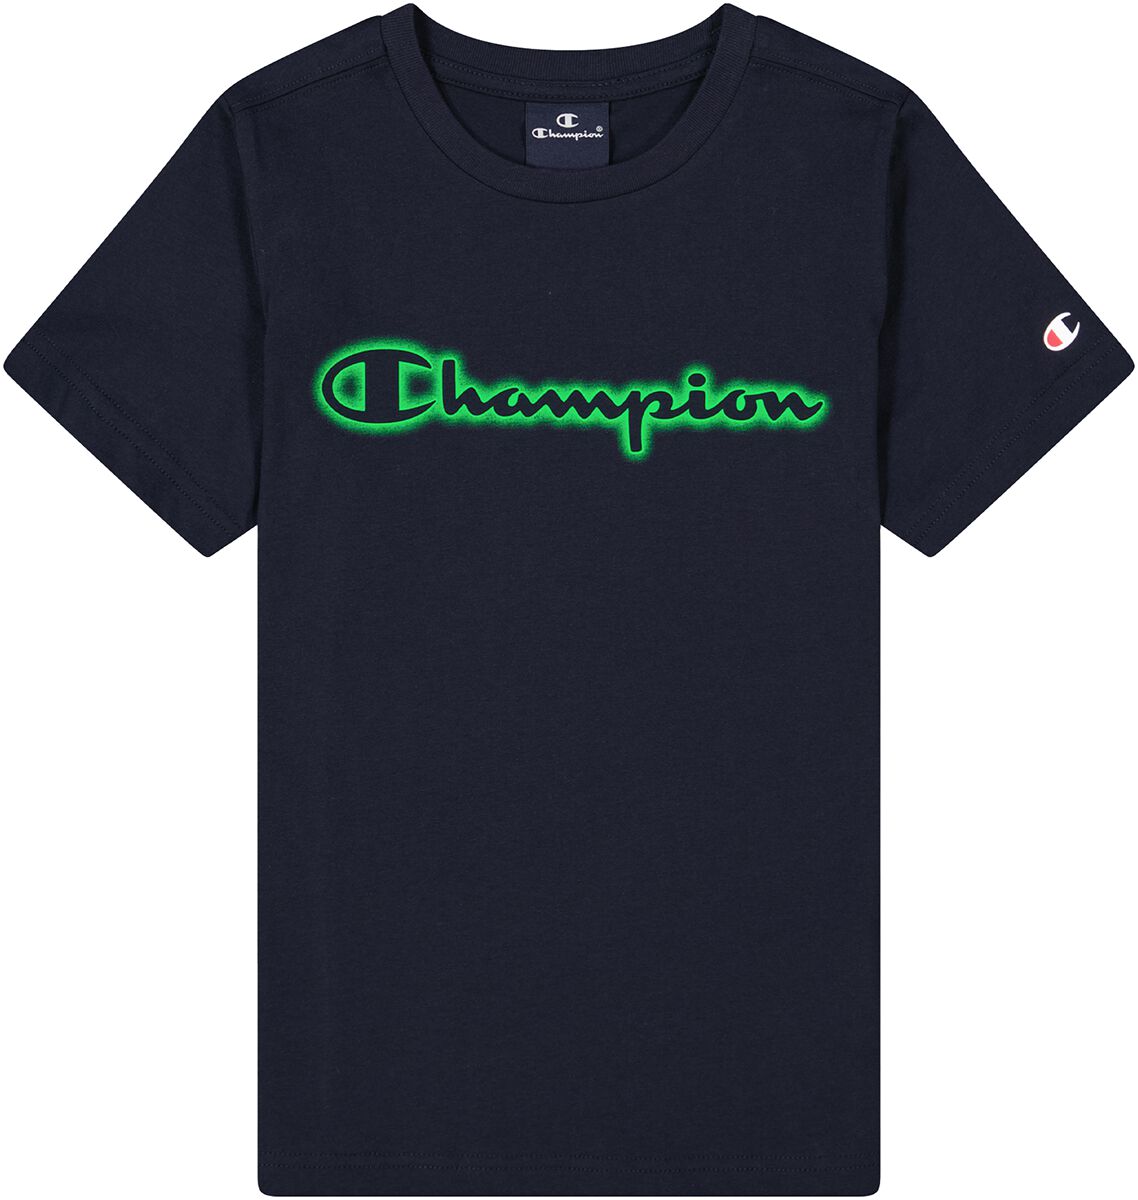 T-shirt de Champion - Legacy Neon Spray Tee - 122/128 à 170/176 - pour garçons - marine